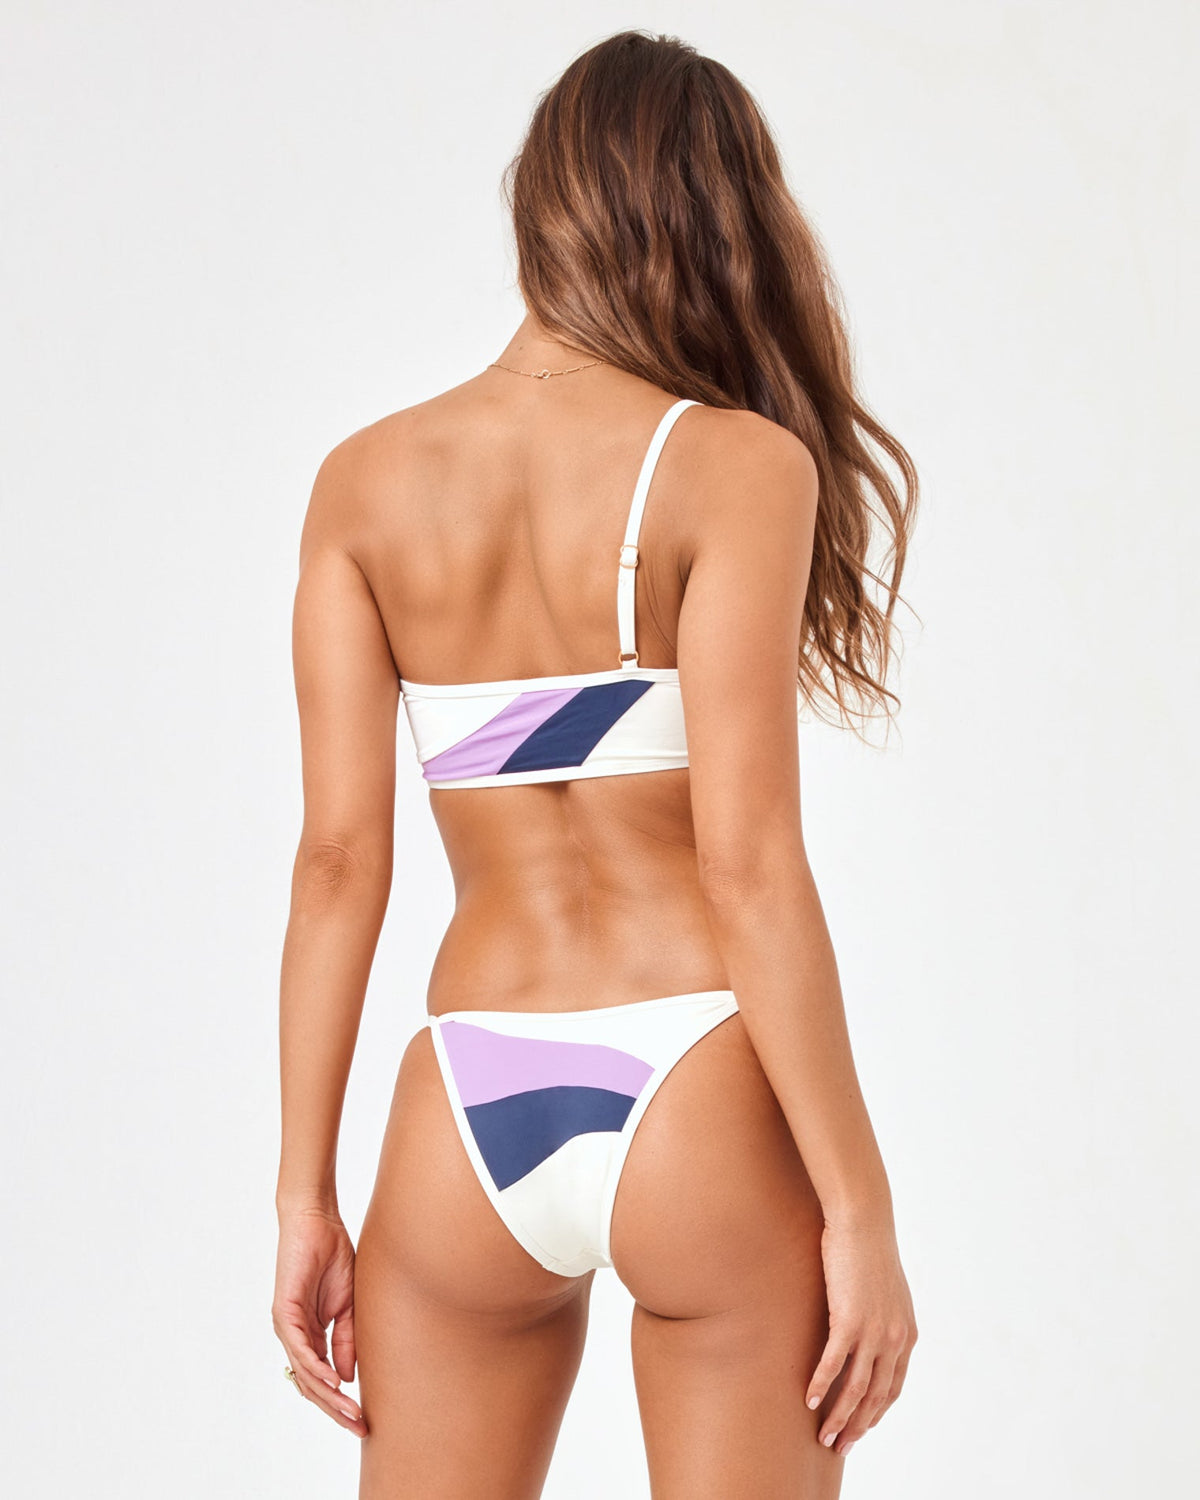 Daybreak Bikini Bottom - Lily-Slate-Cream Lily-Slate-Cream | Model: Anna (size: S)